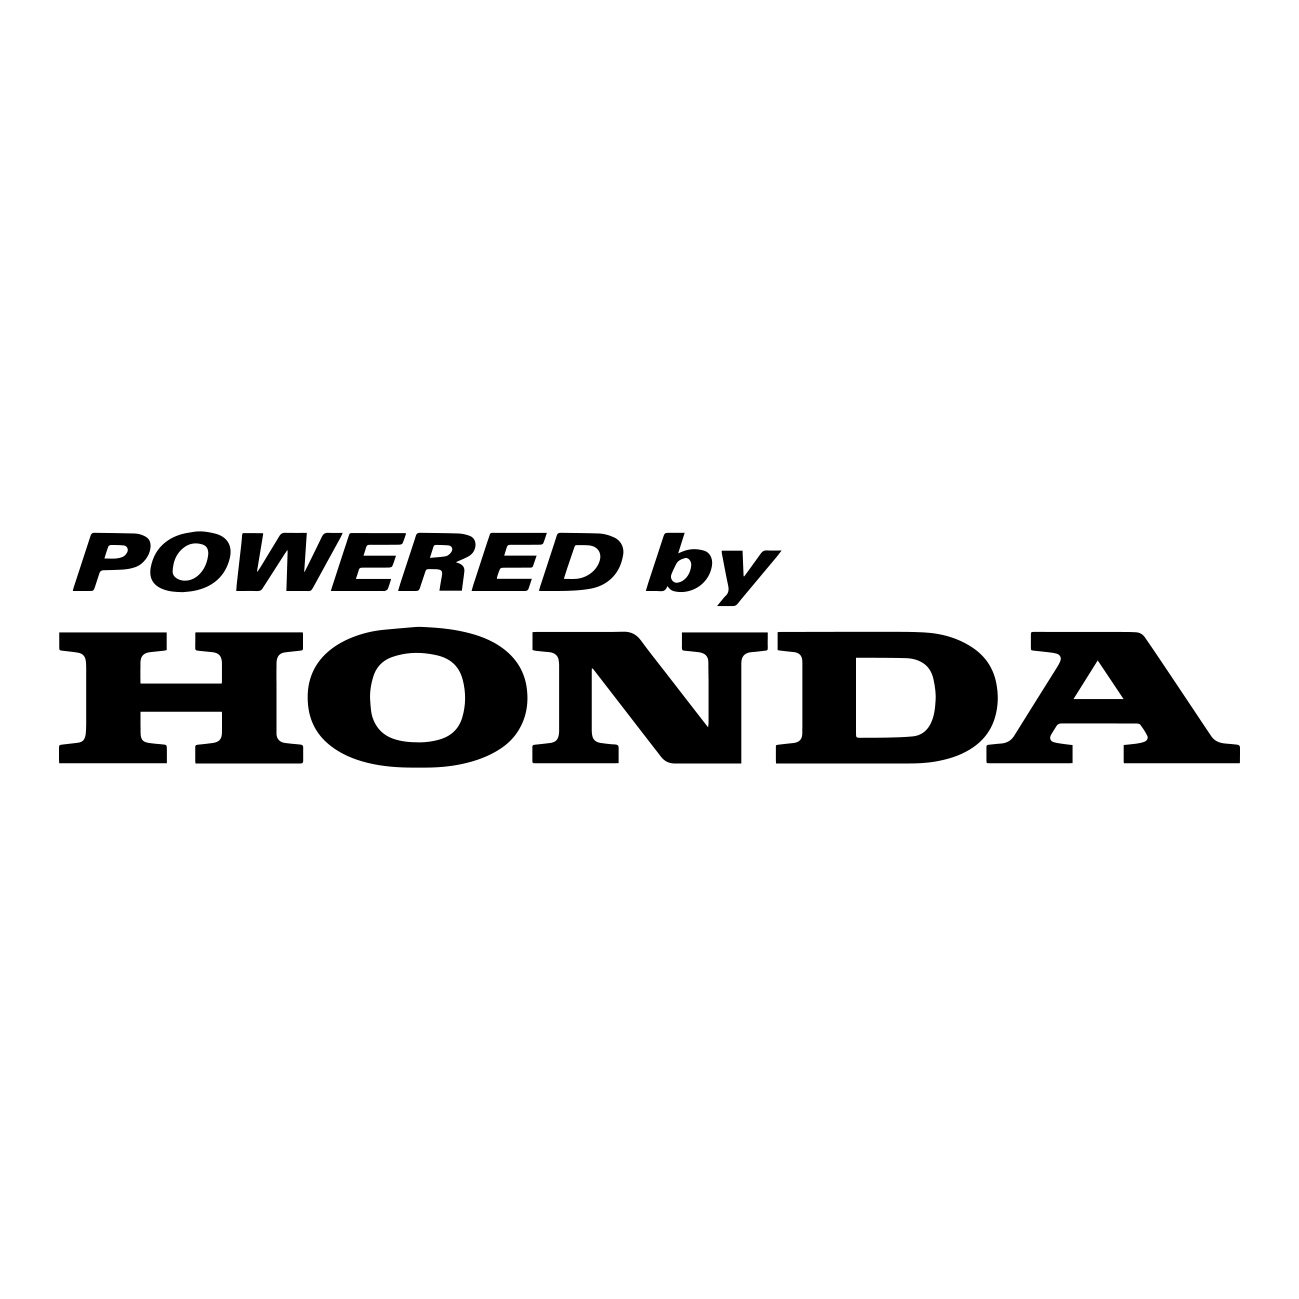 powered by honda